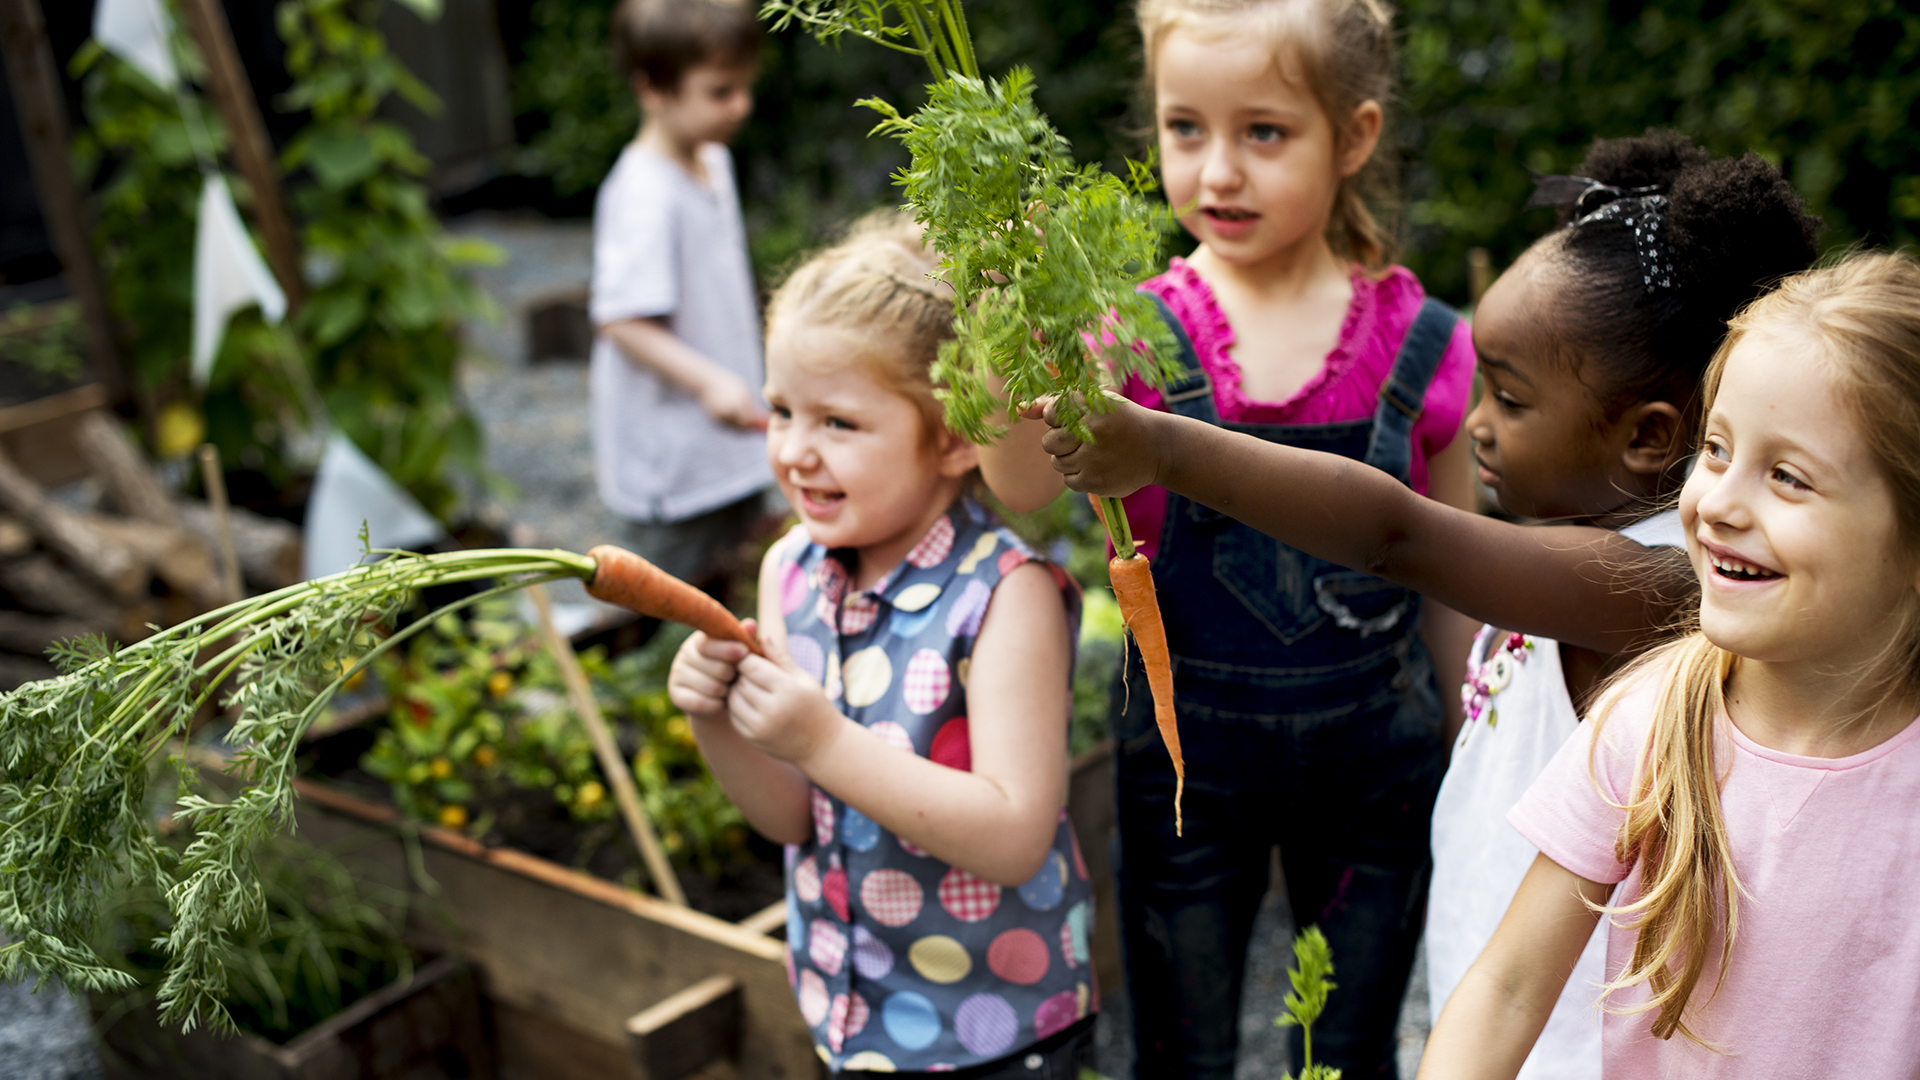 Children in a garden holding carrots